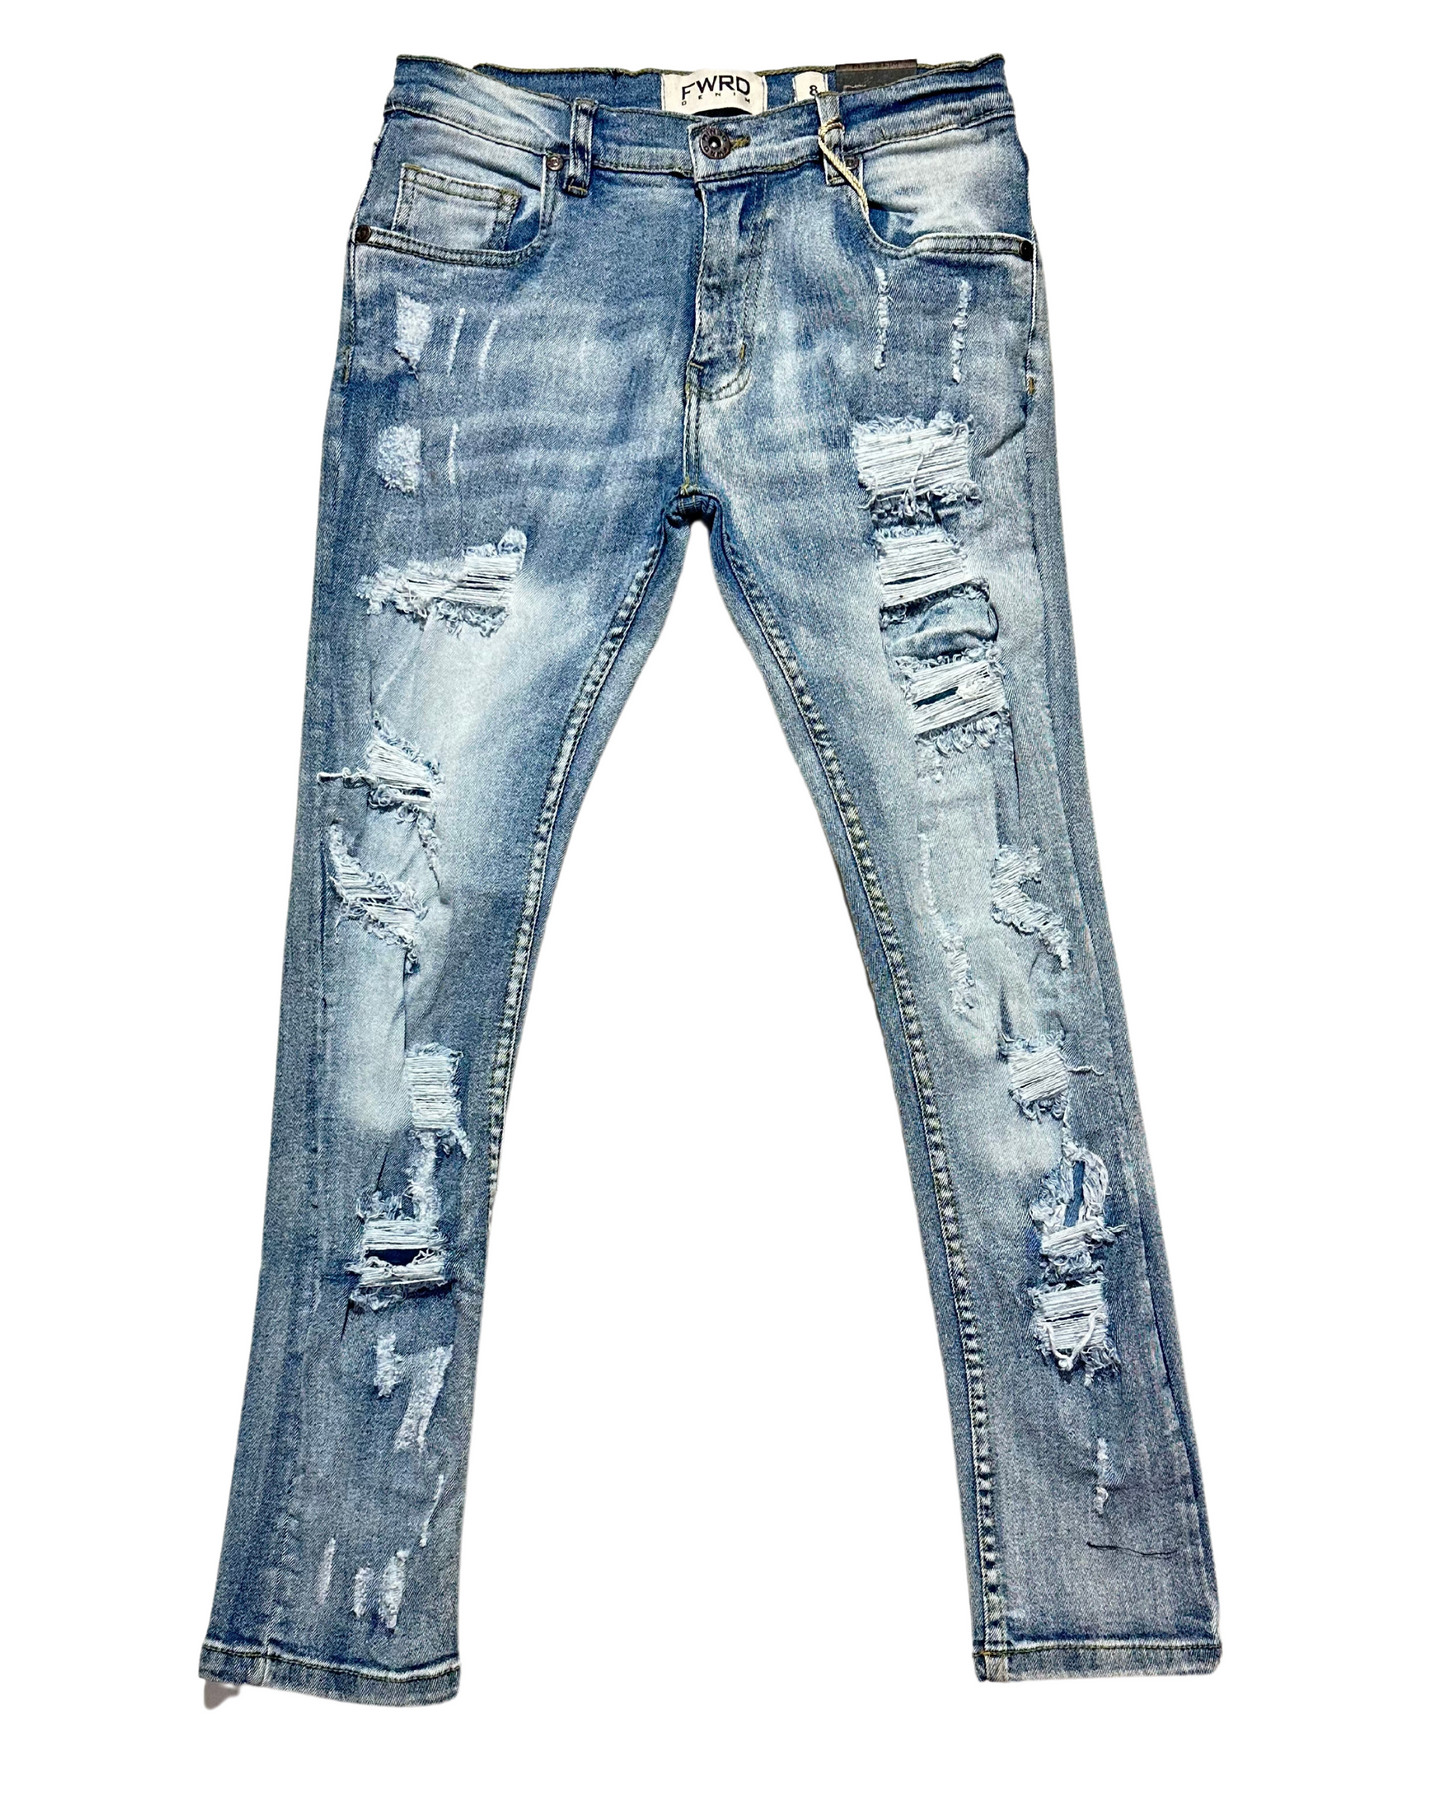 Kids Slim Fit Jeans 33707K